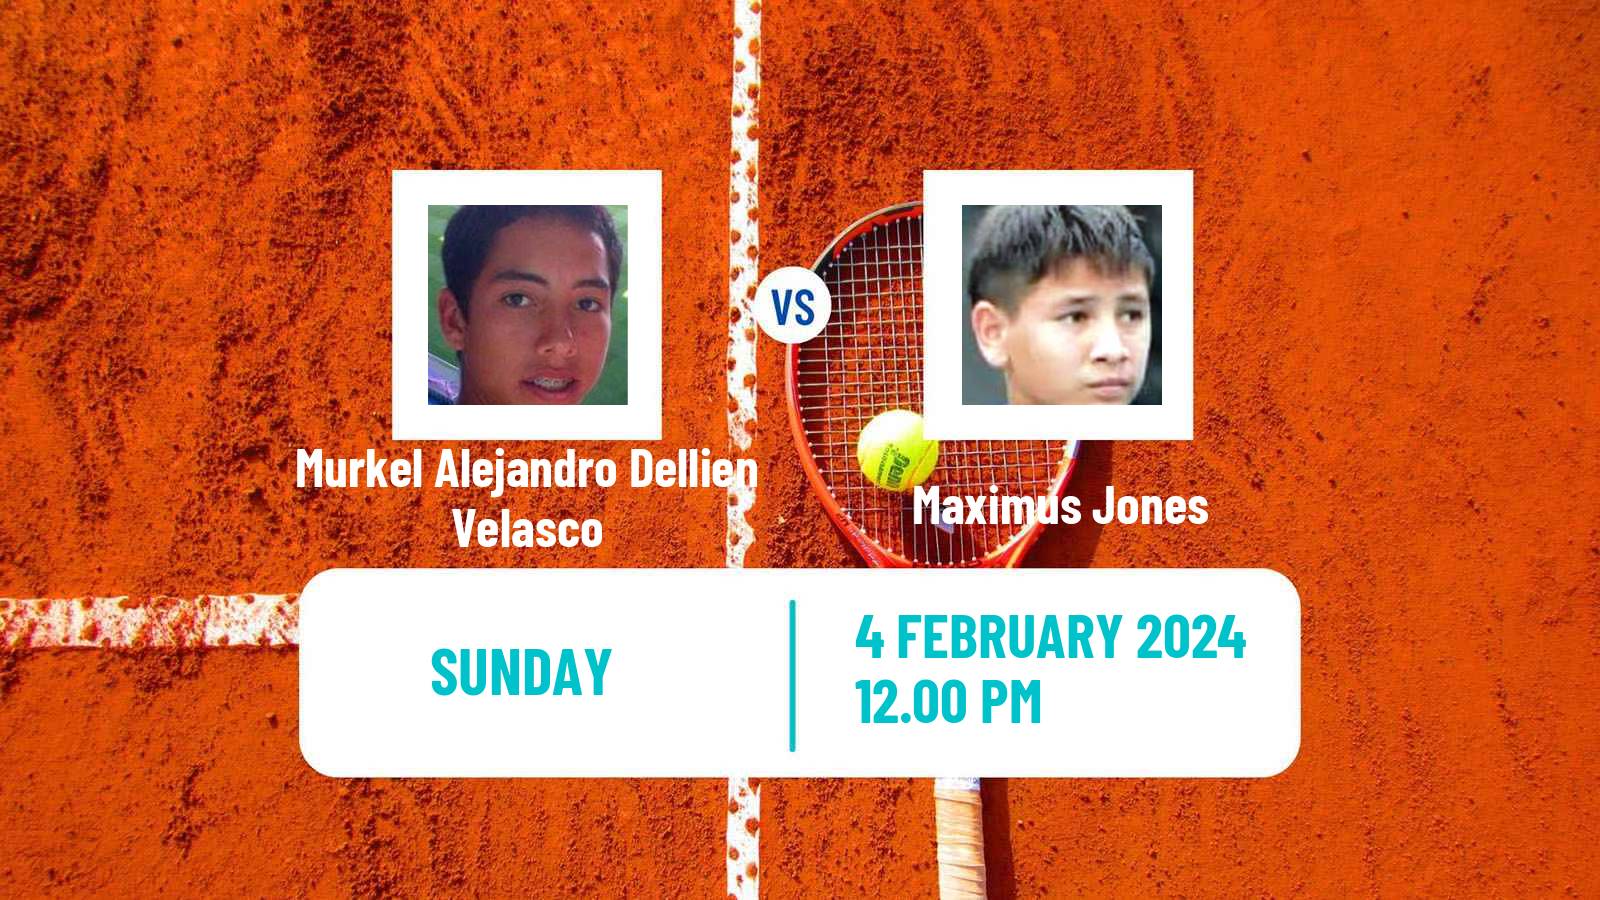 Tennis Davis Cup World Group II Murkel Alejandro Dellien Velasco - Maximus Jones